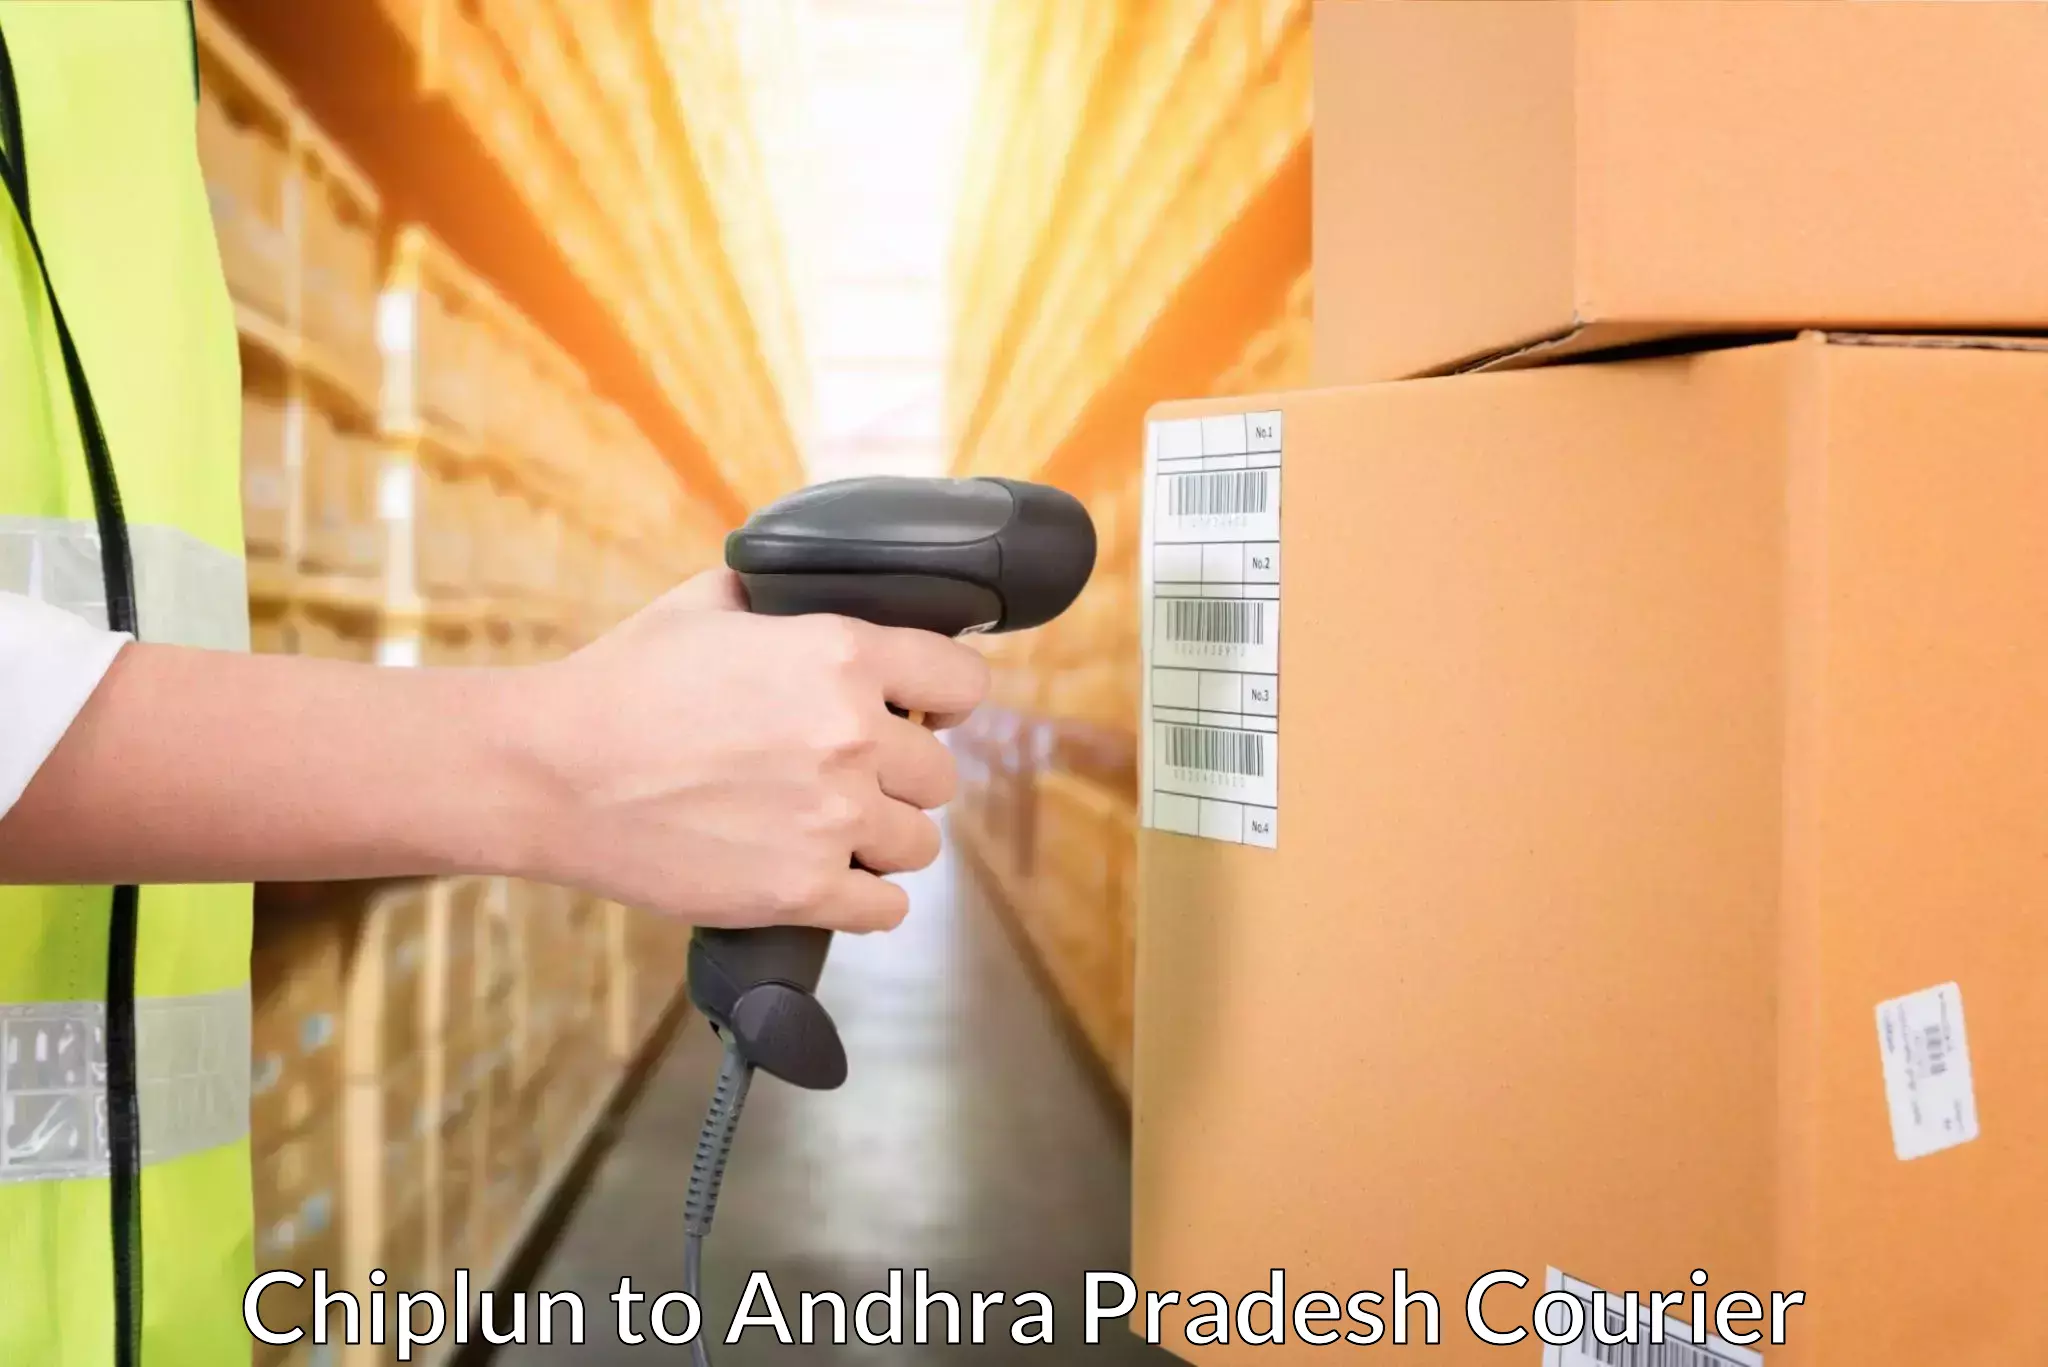 Courier service comparison Chiplun to B Kothakota